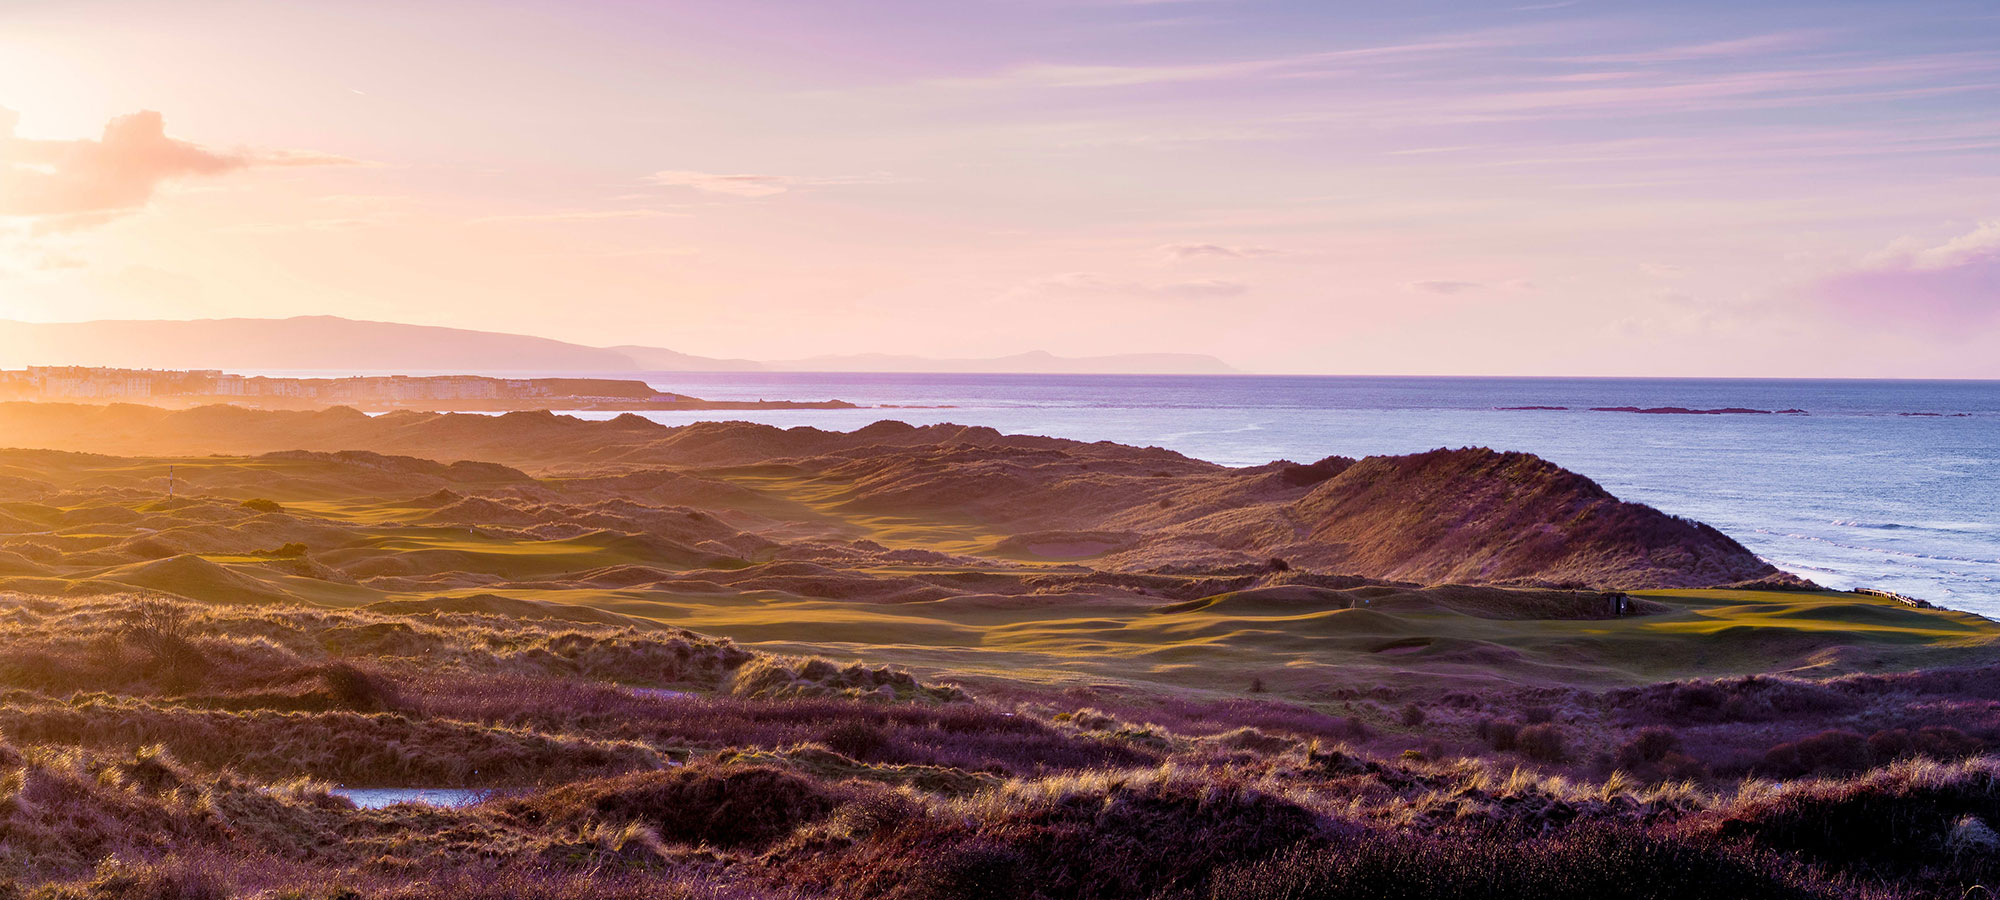 Northern Ireland Golf Holidays – A Major Destination